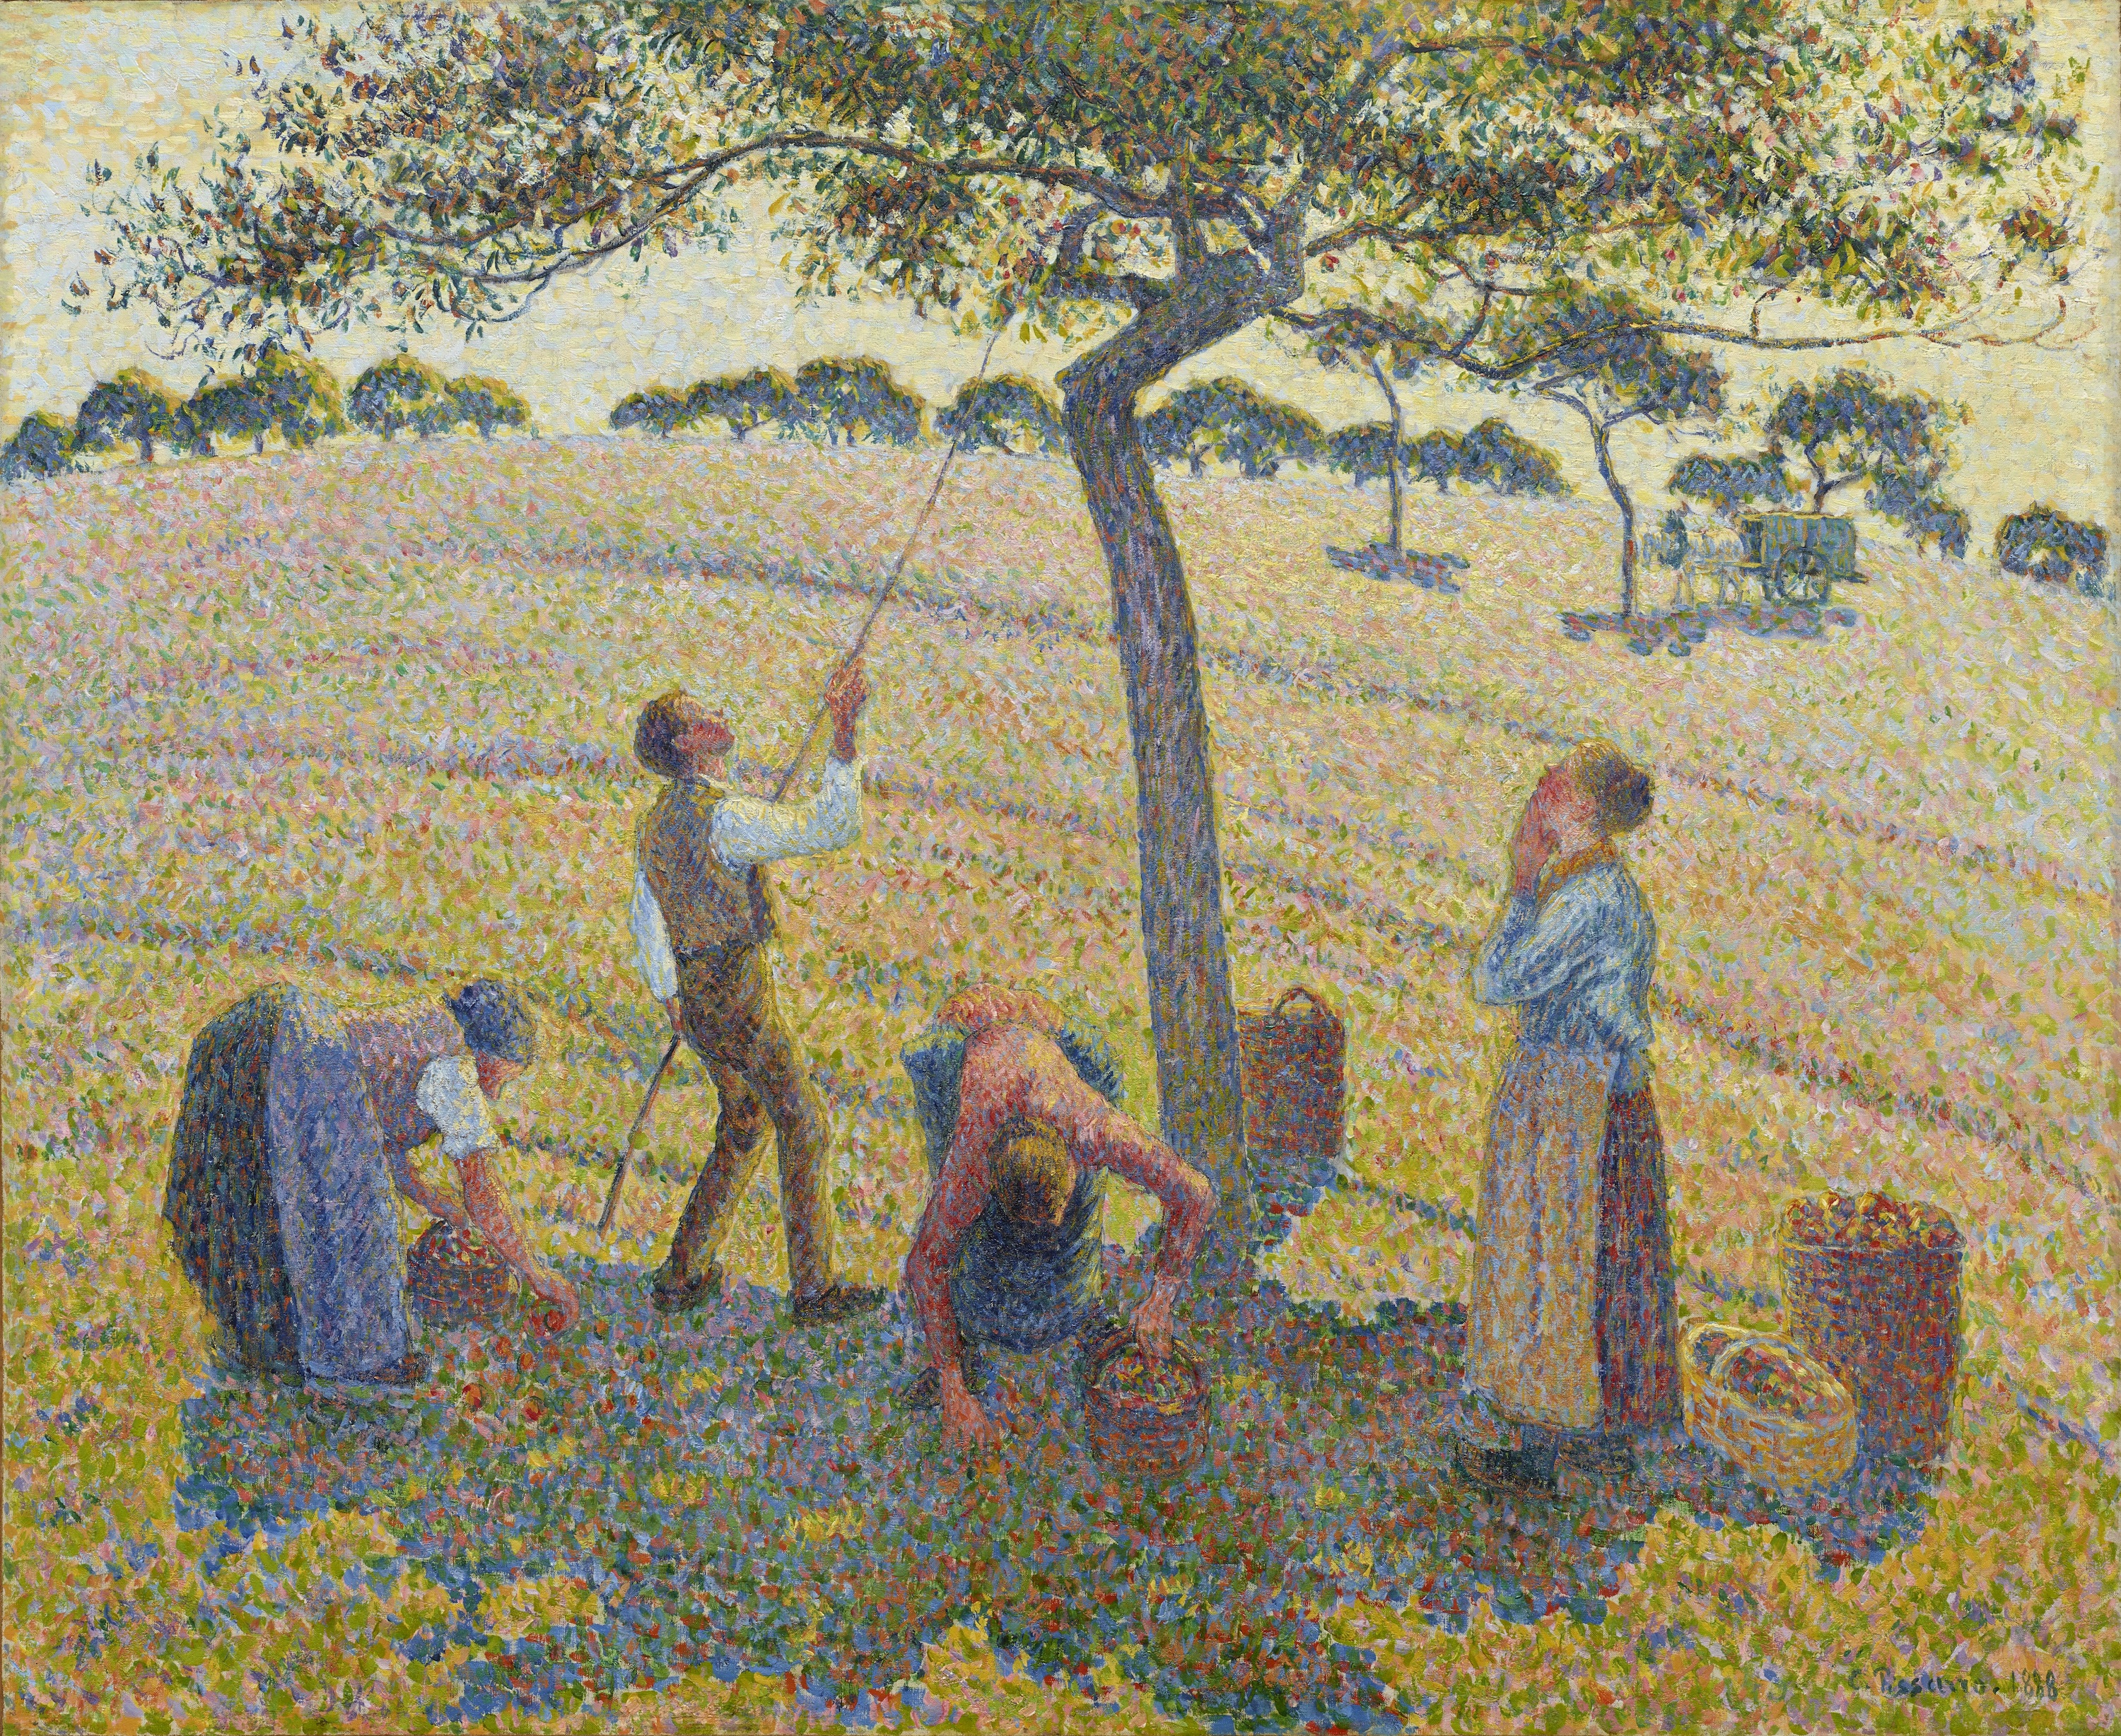 Apple Harvest by Camille Pissarro - 1888 - 61 x 74 cm Dallas Museum of Art